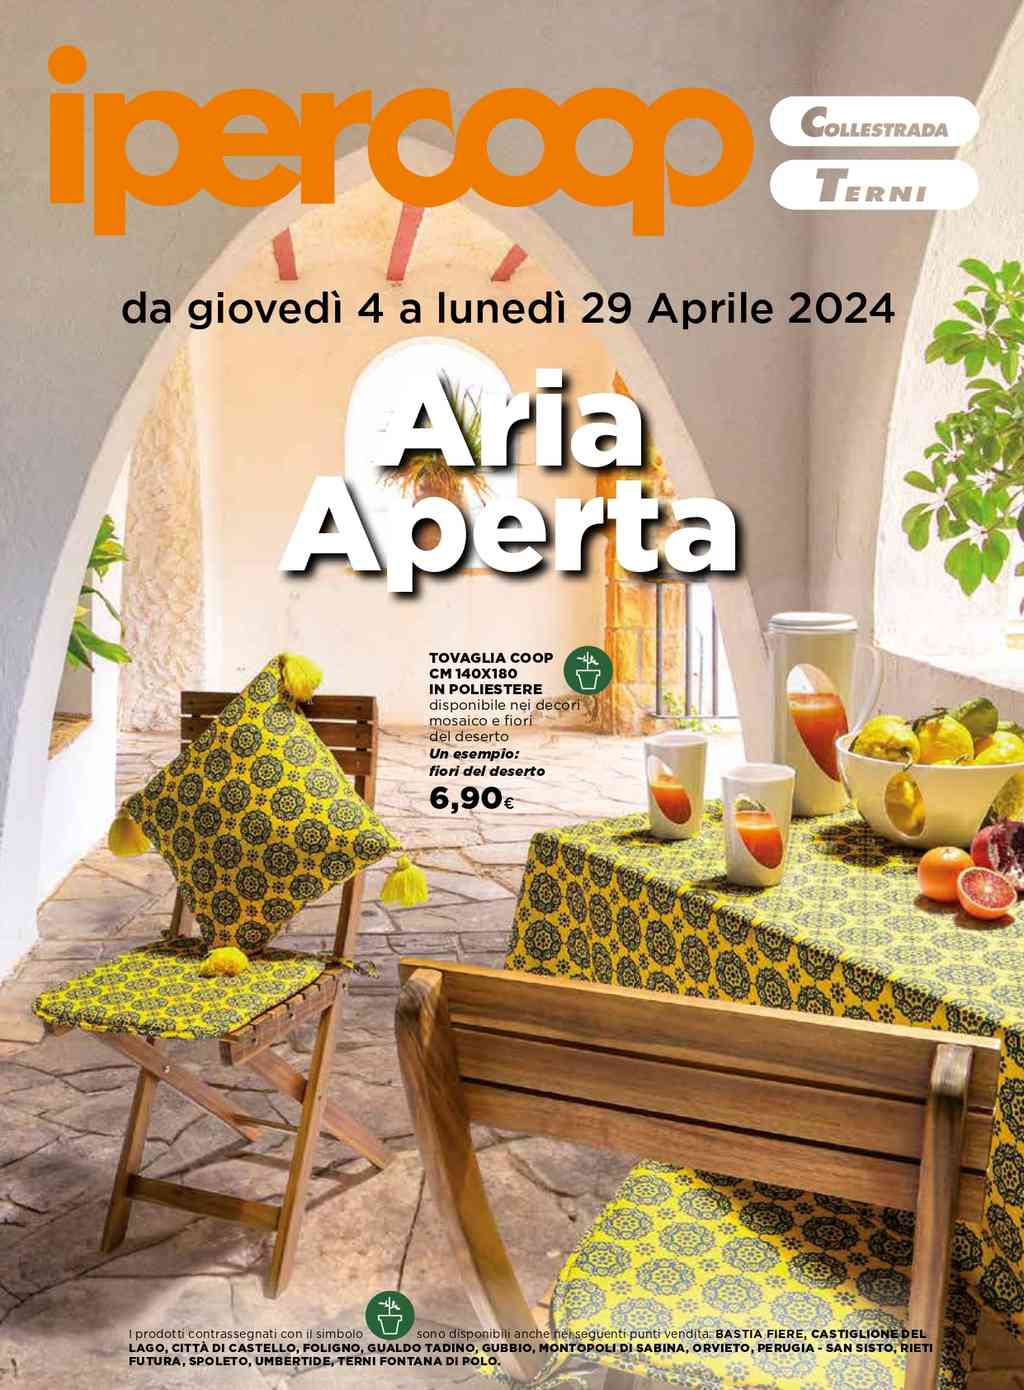 Volantino Ipercoop Centro Italia Aria Aperta dal 4 al 29 aprile 2024